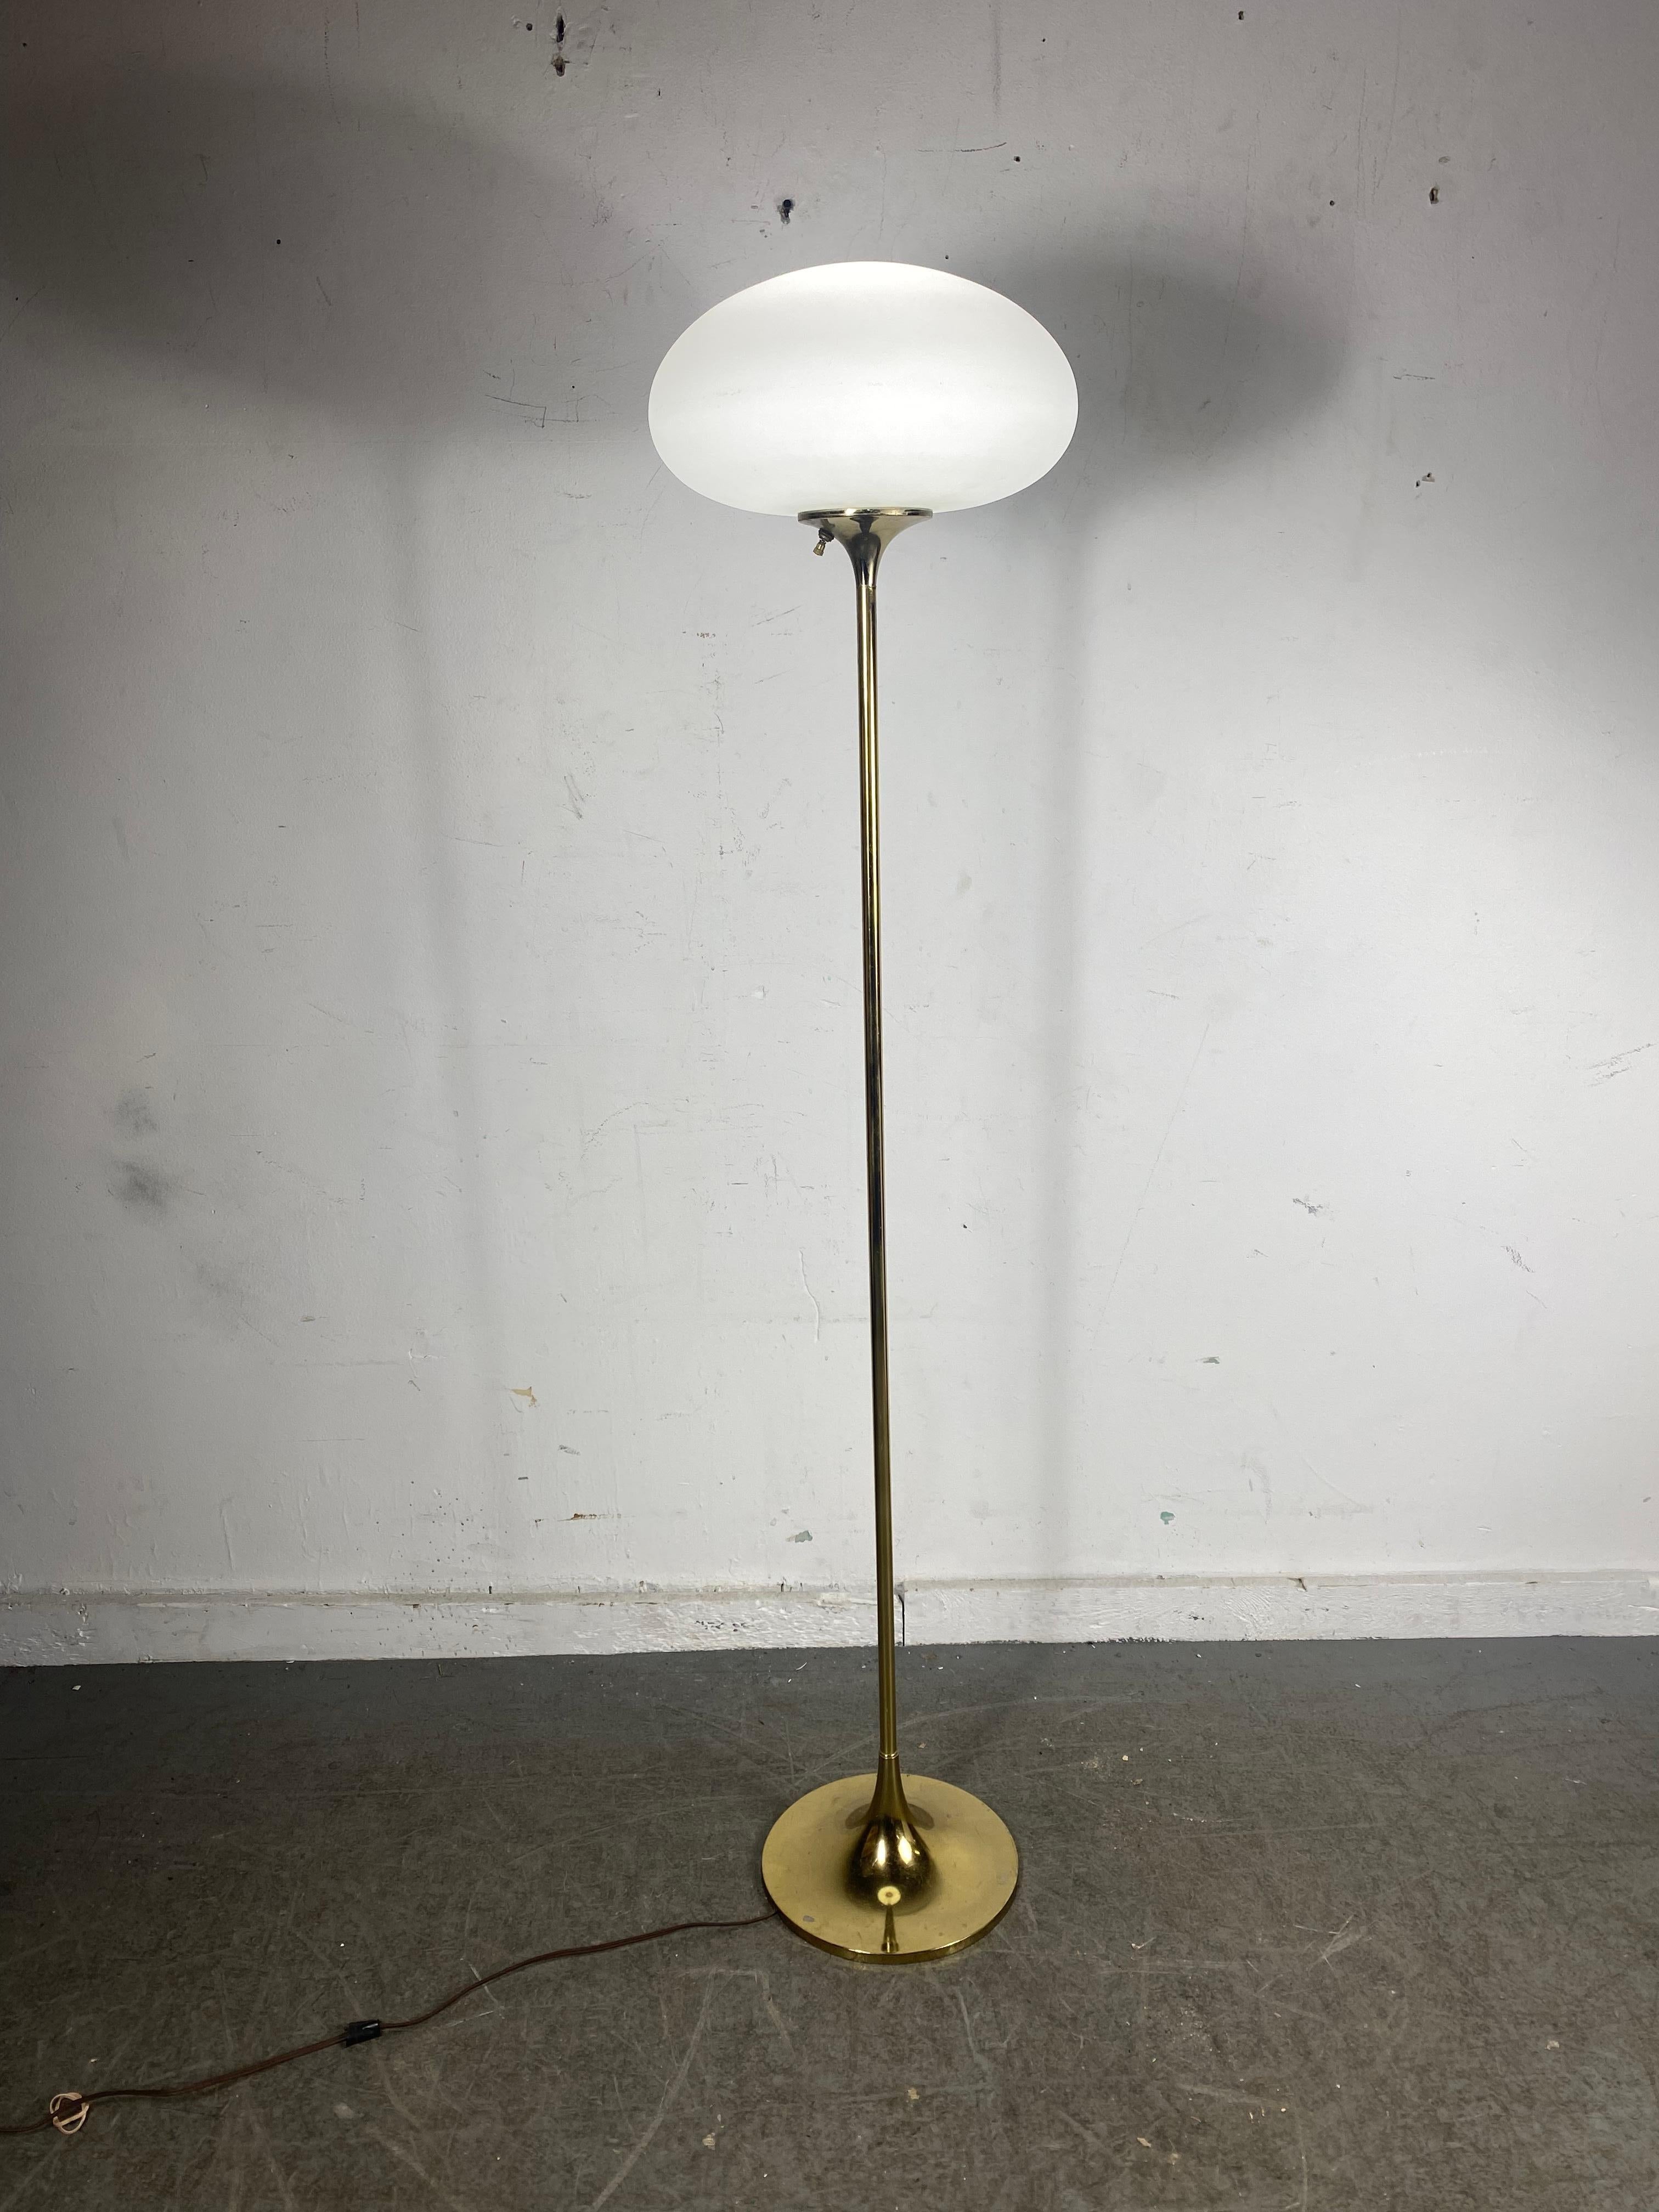 Metal Iconic 1960s Floor Lamp by Laurel, Gold Standard, Blown Glass Mushroom Shade